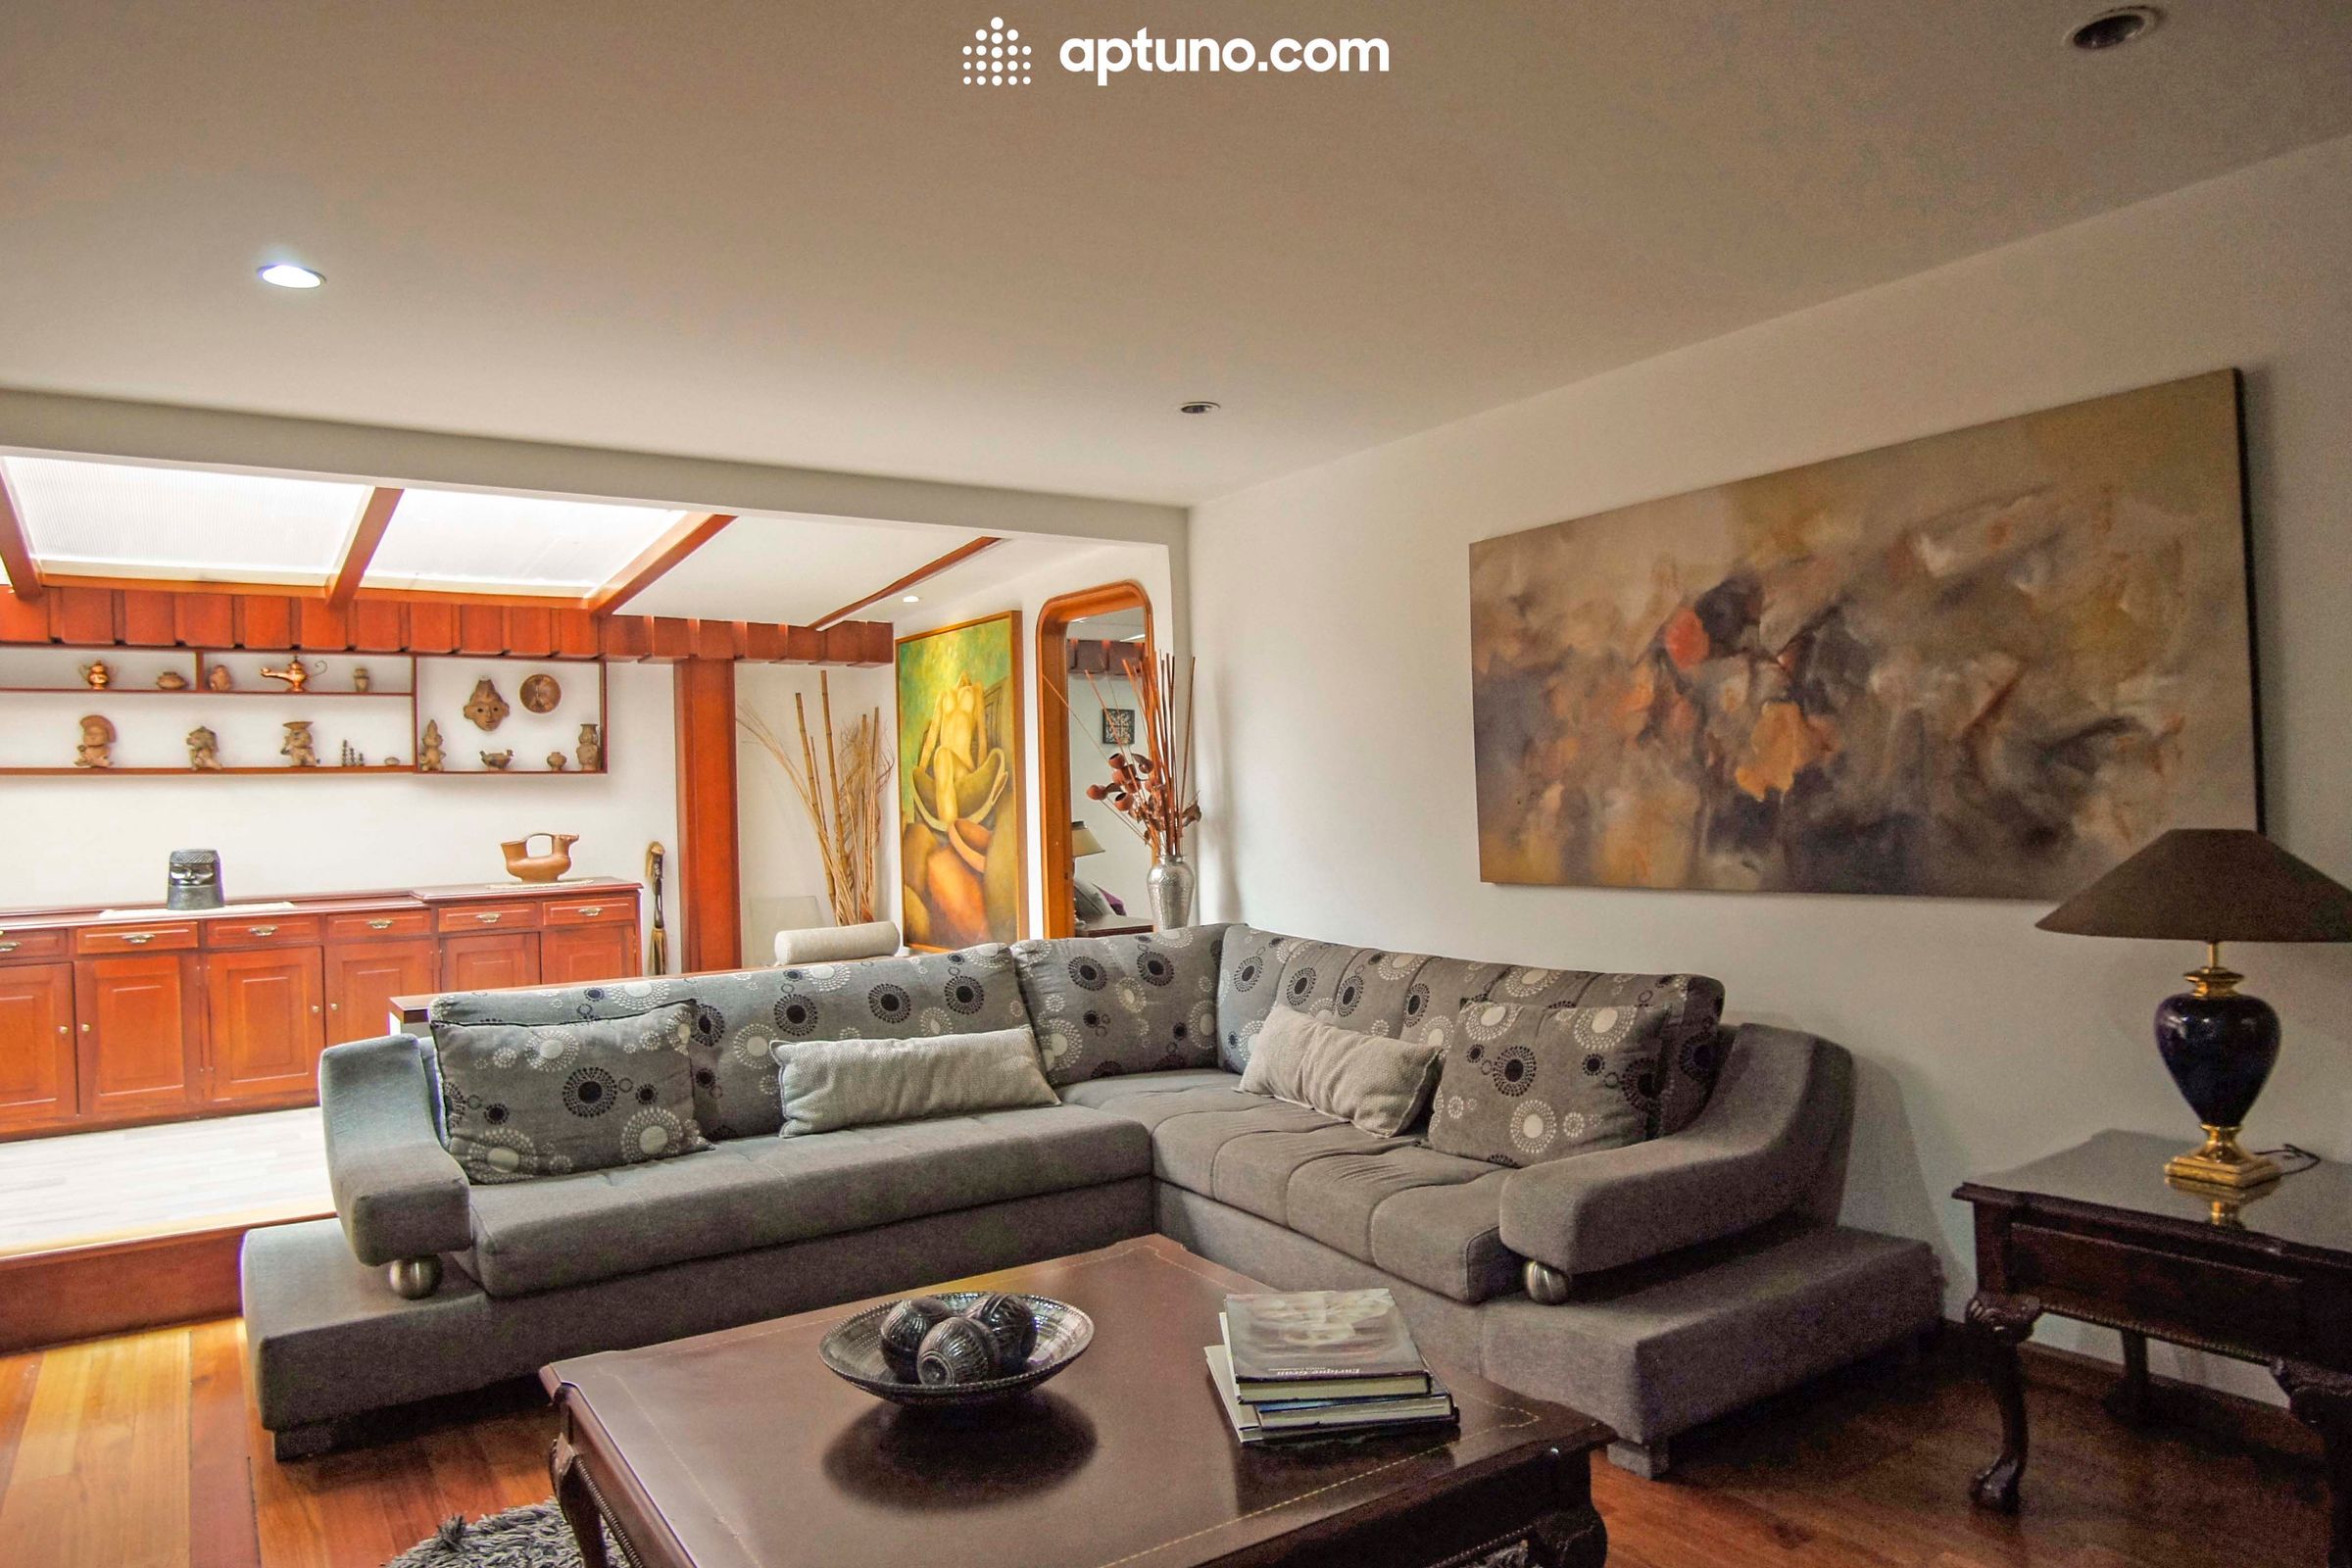 Apartamento en arriendo Santa Bibiana 268 m² - $ 6.900.000,00